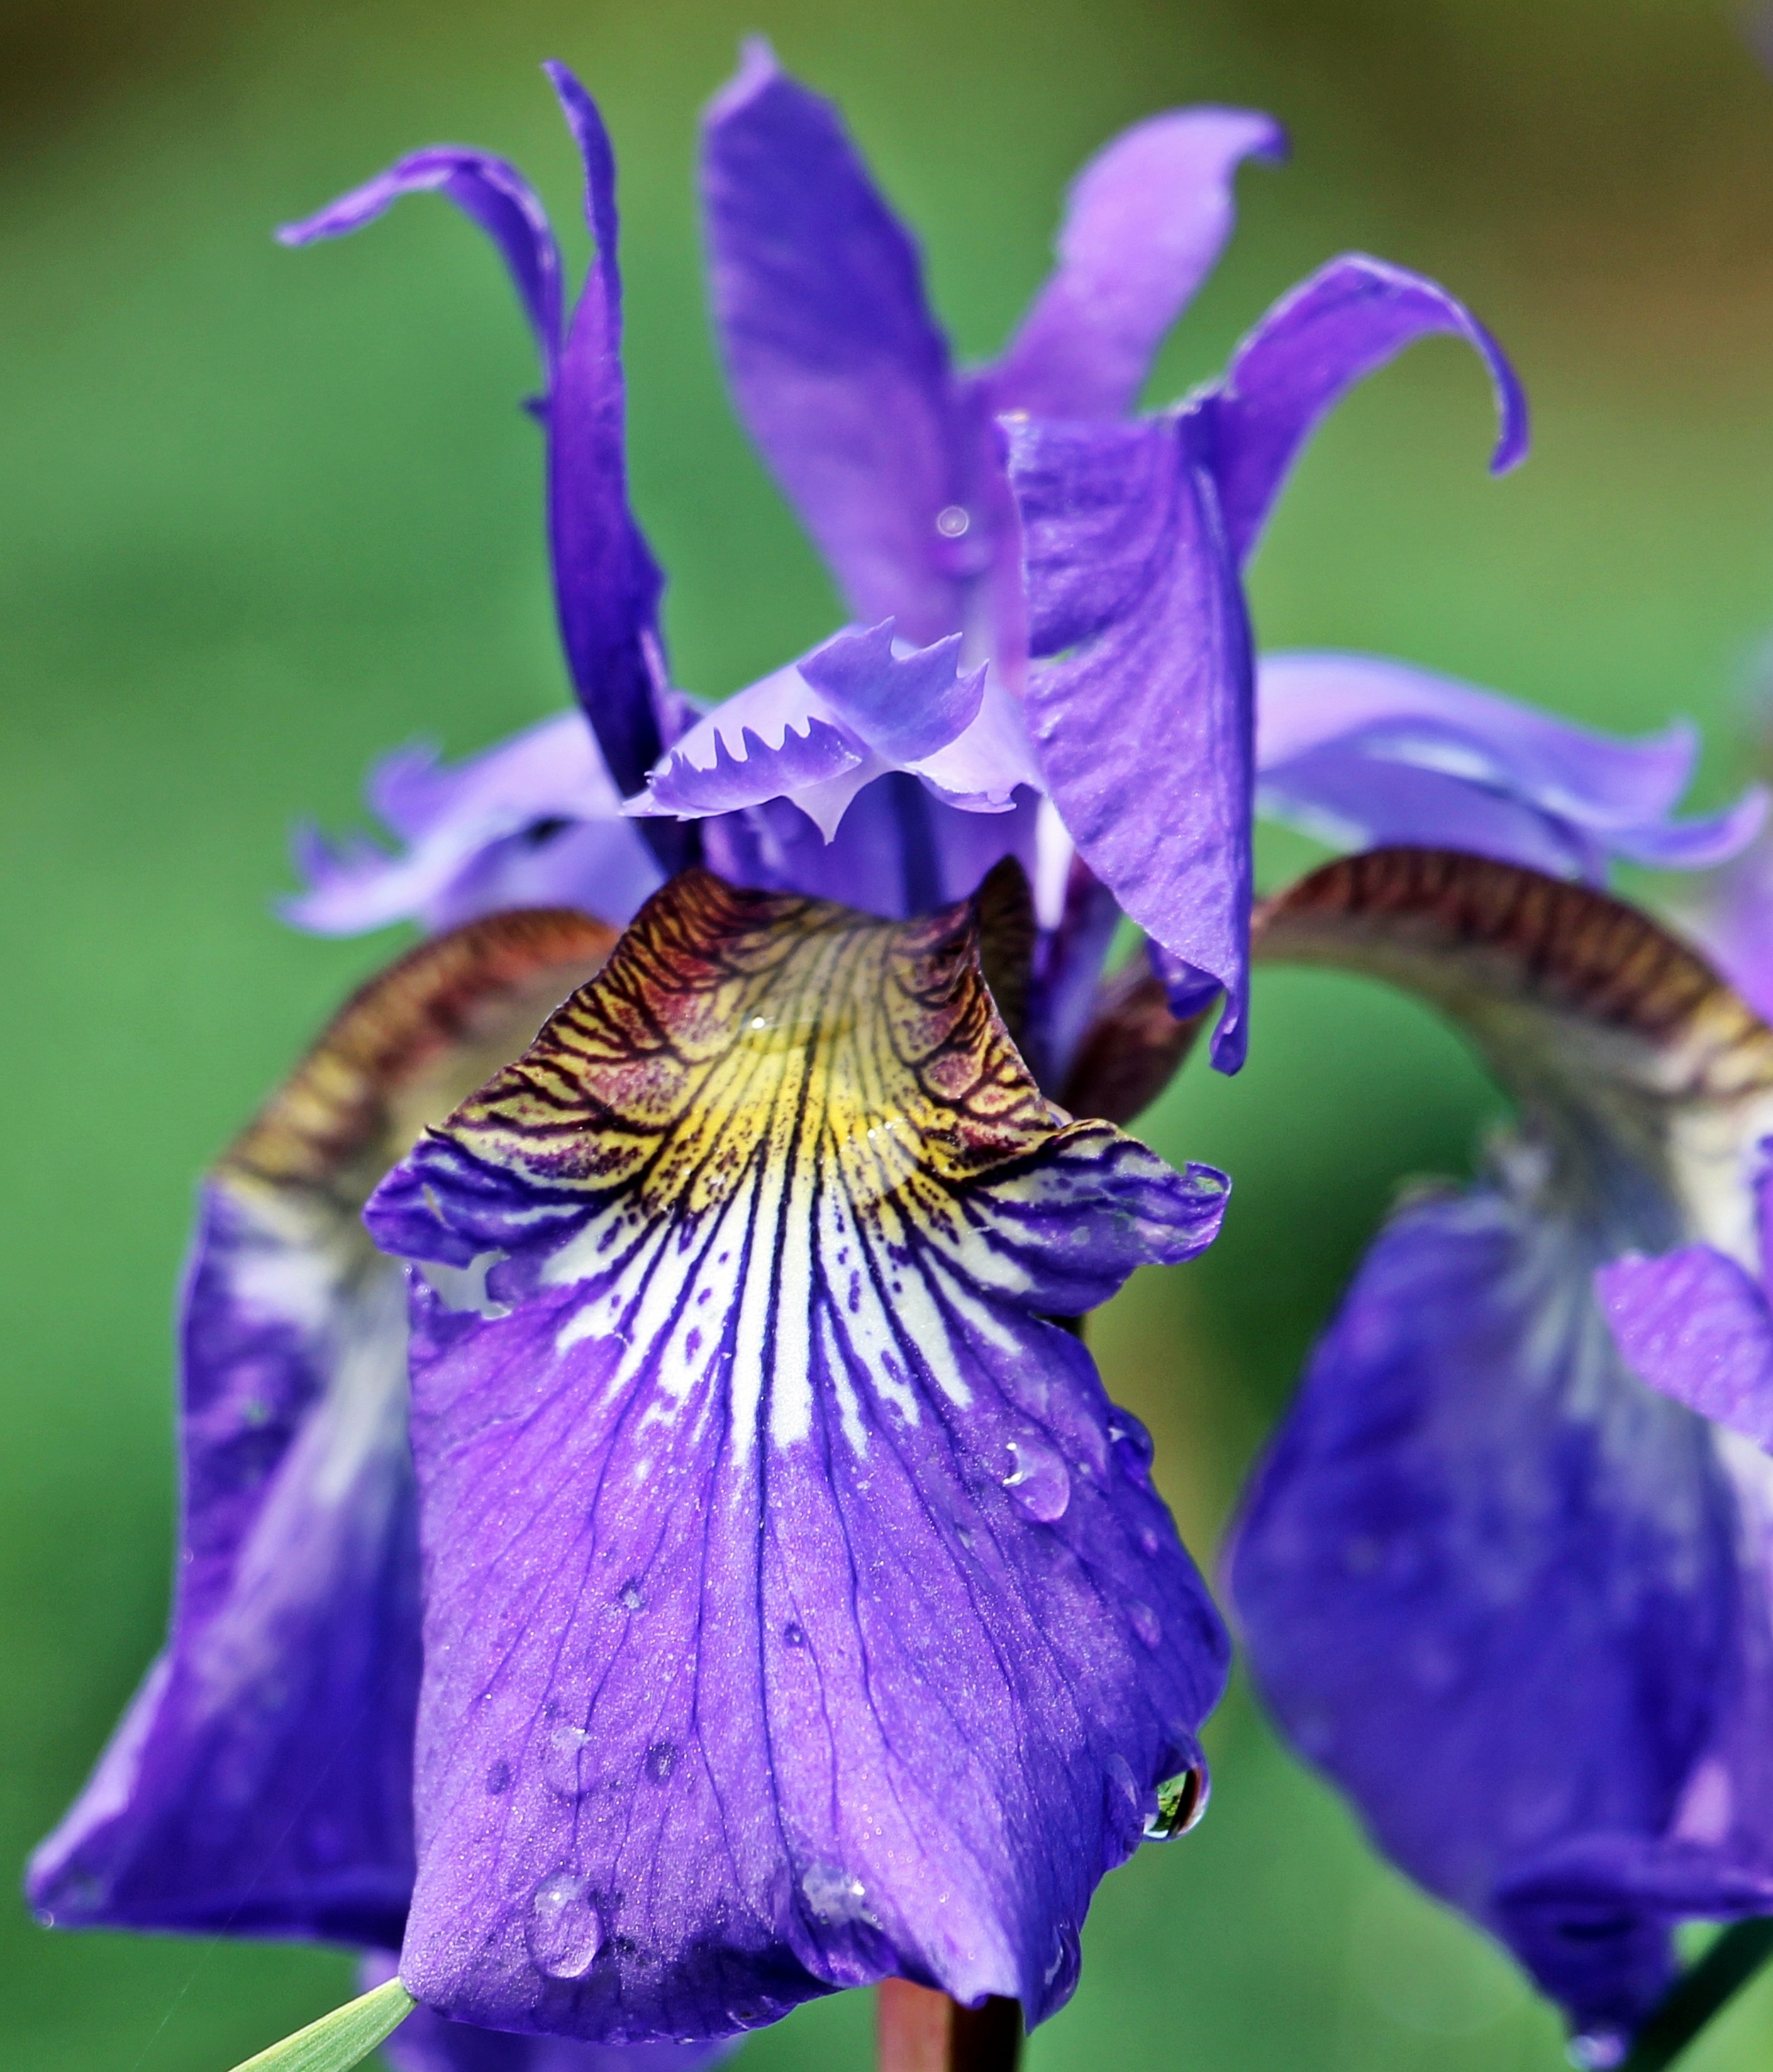 Iris in the garden photo